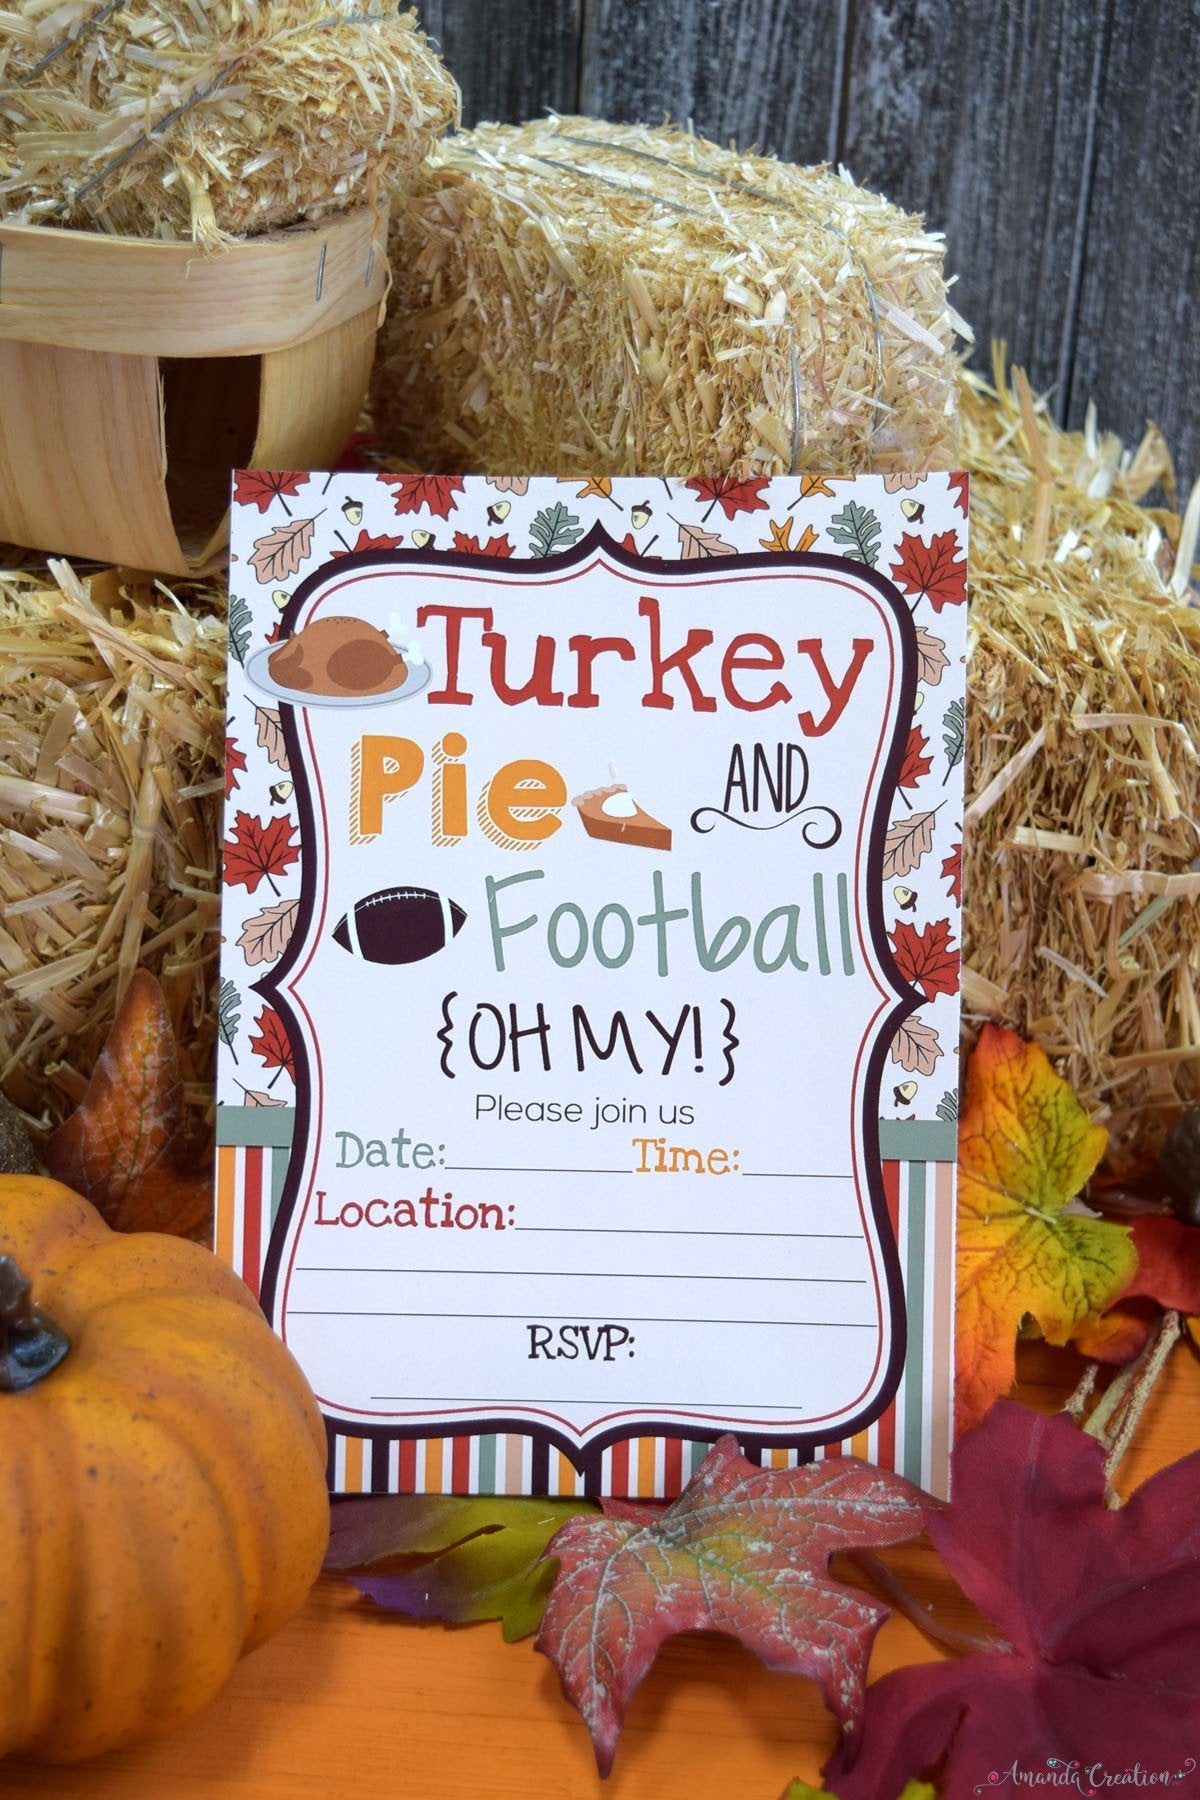 Turkey pie and football oh my invitation